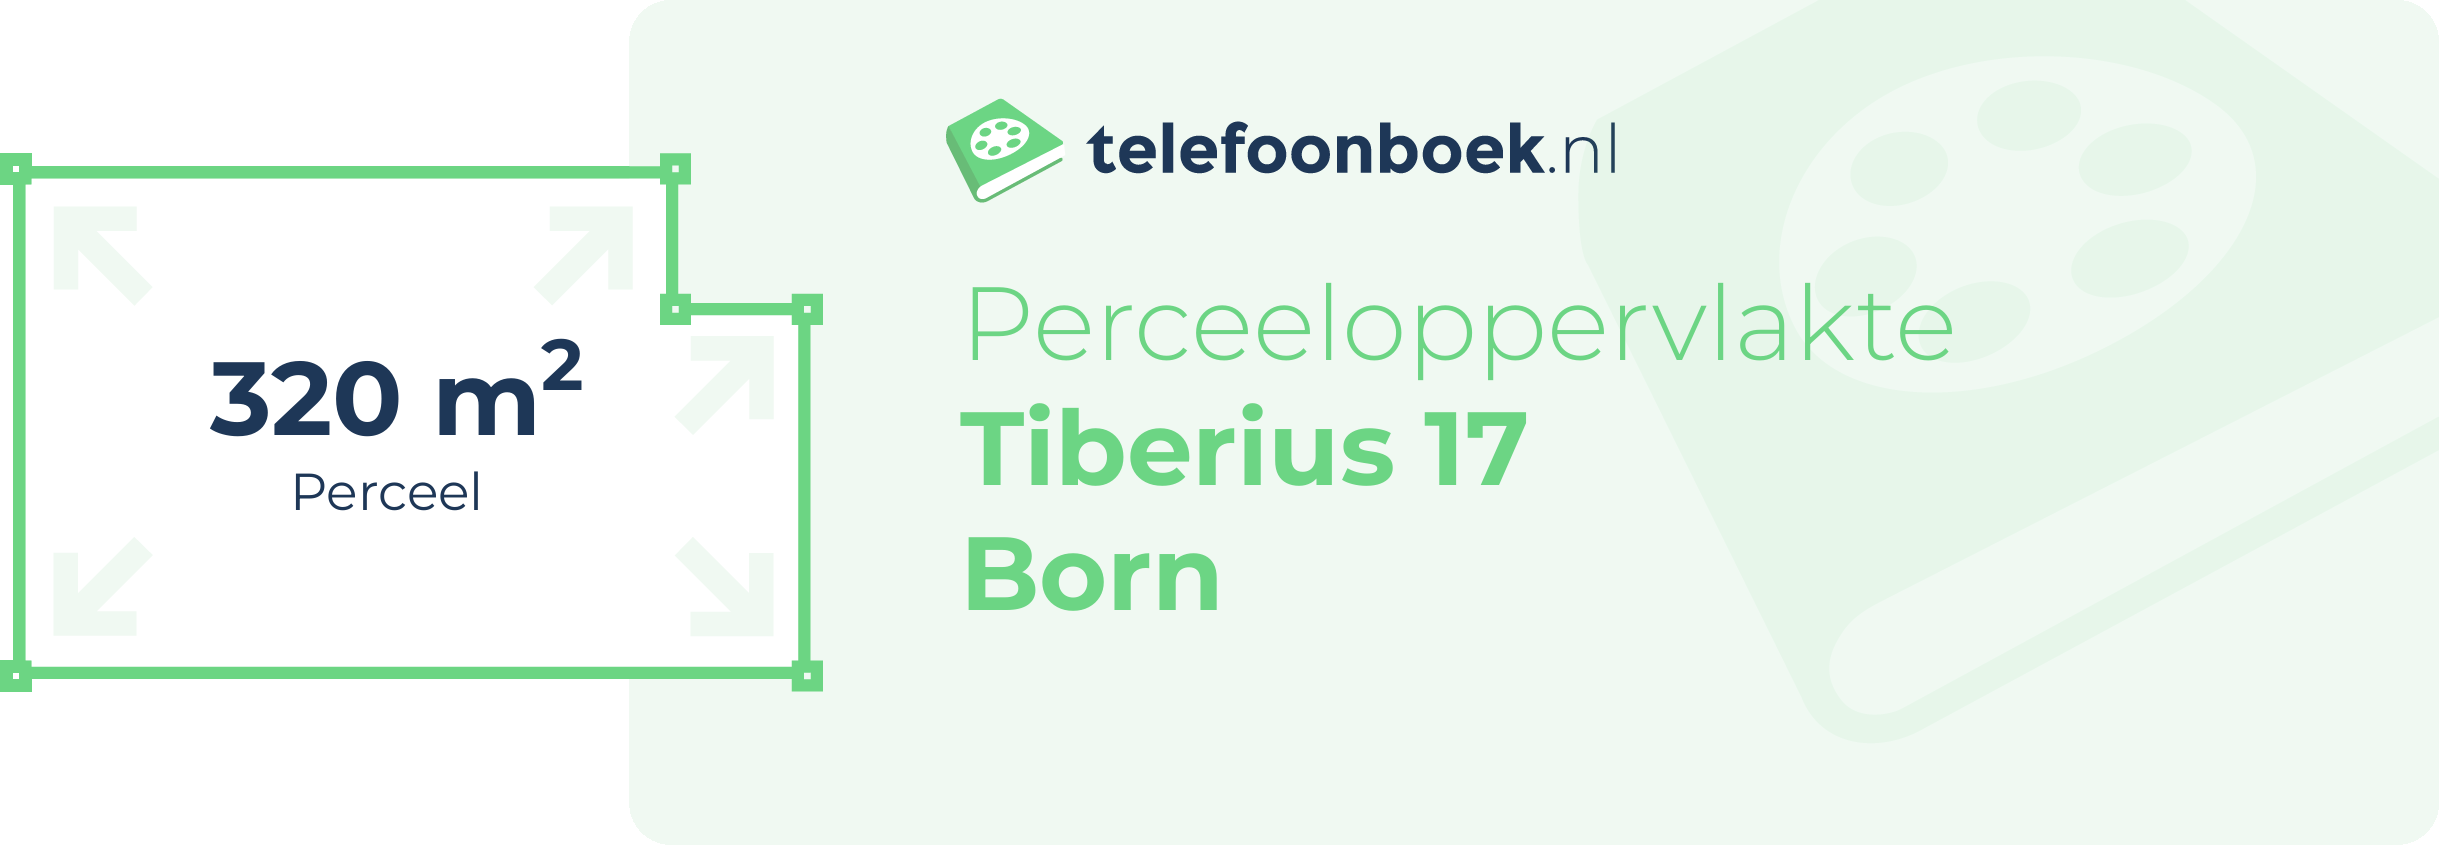 Perceeloppervlakte Tiberius 17 Born